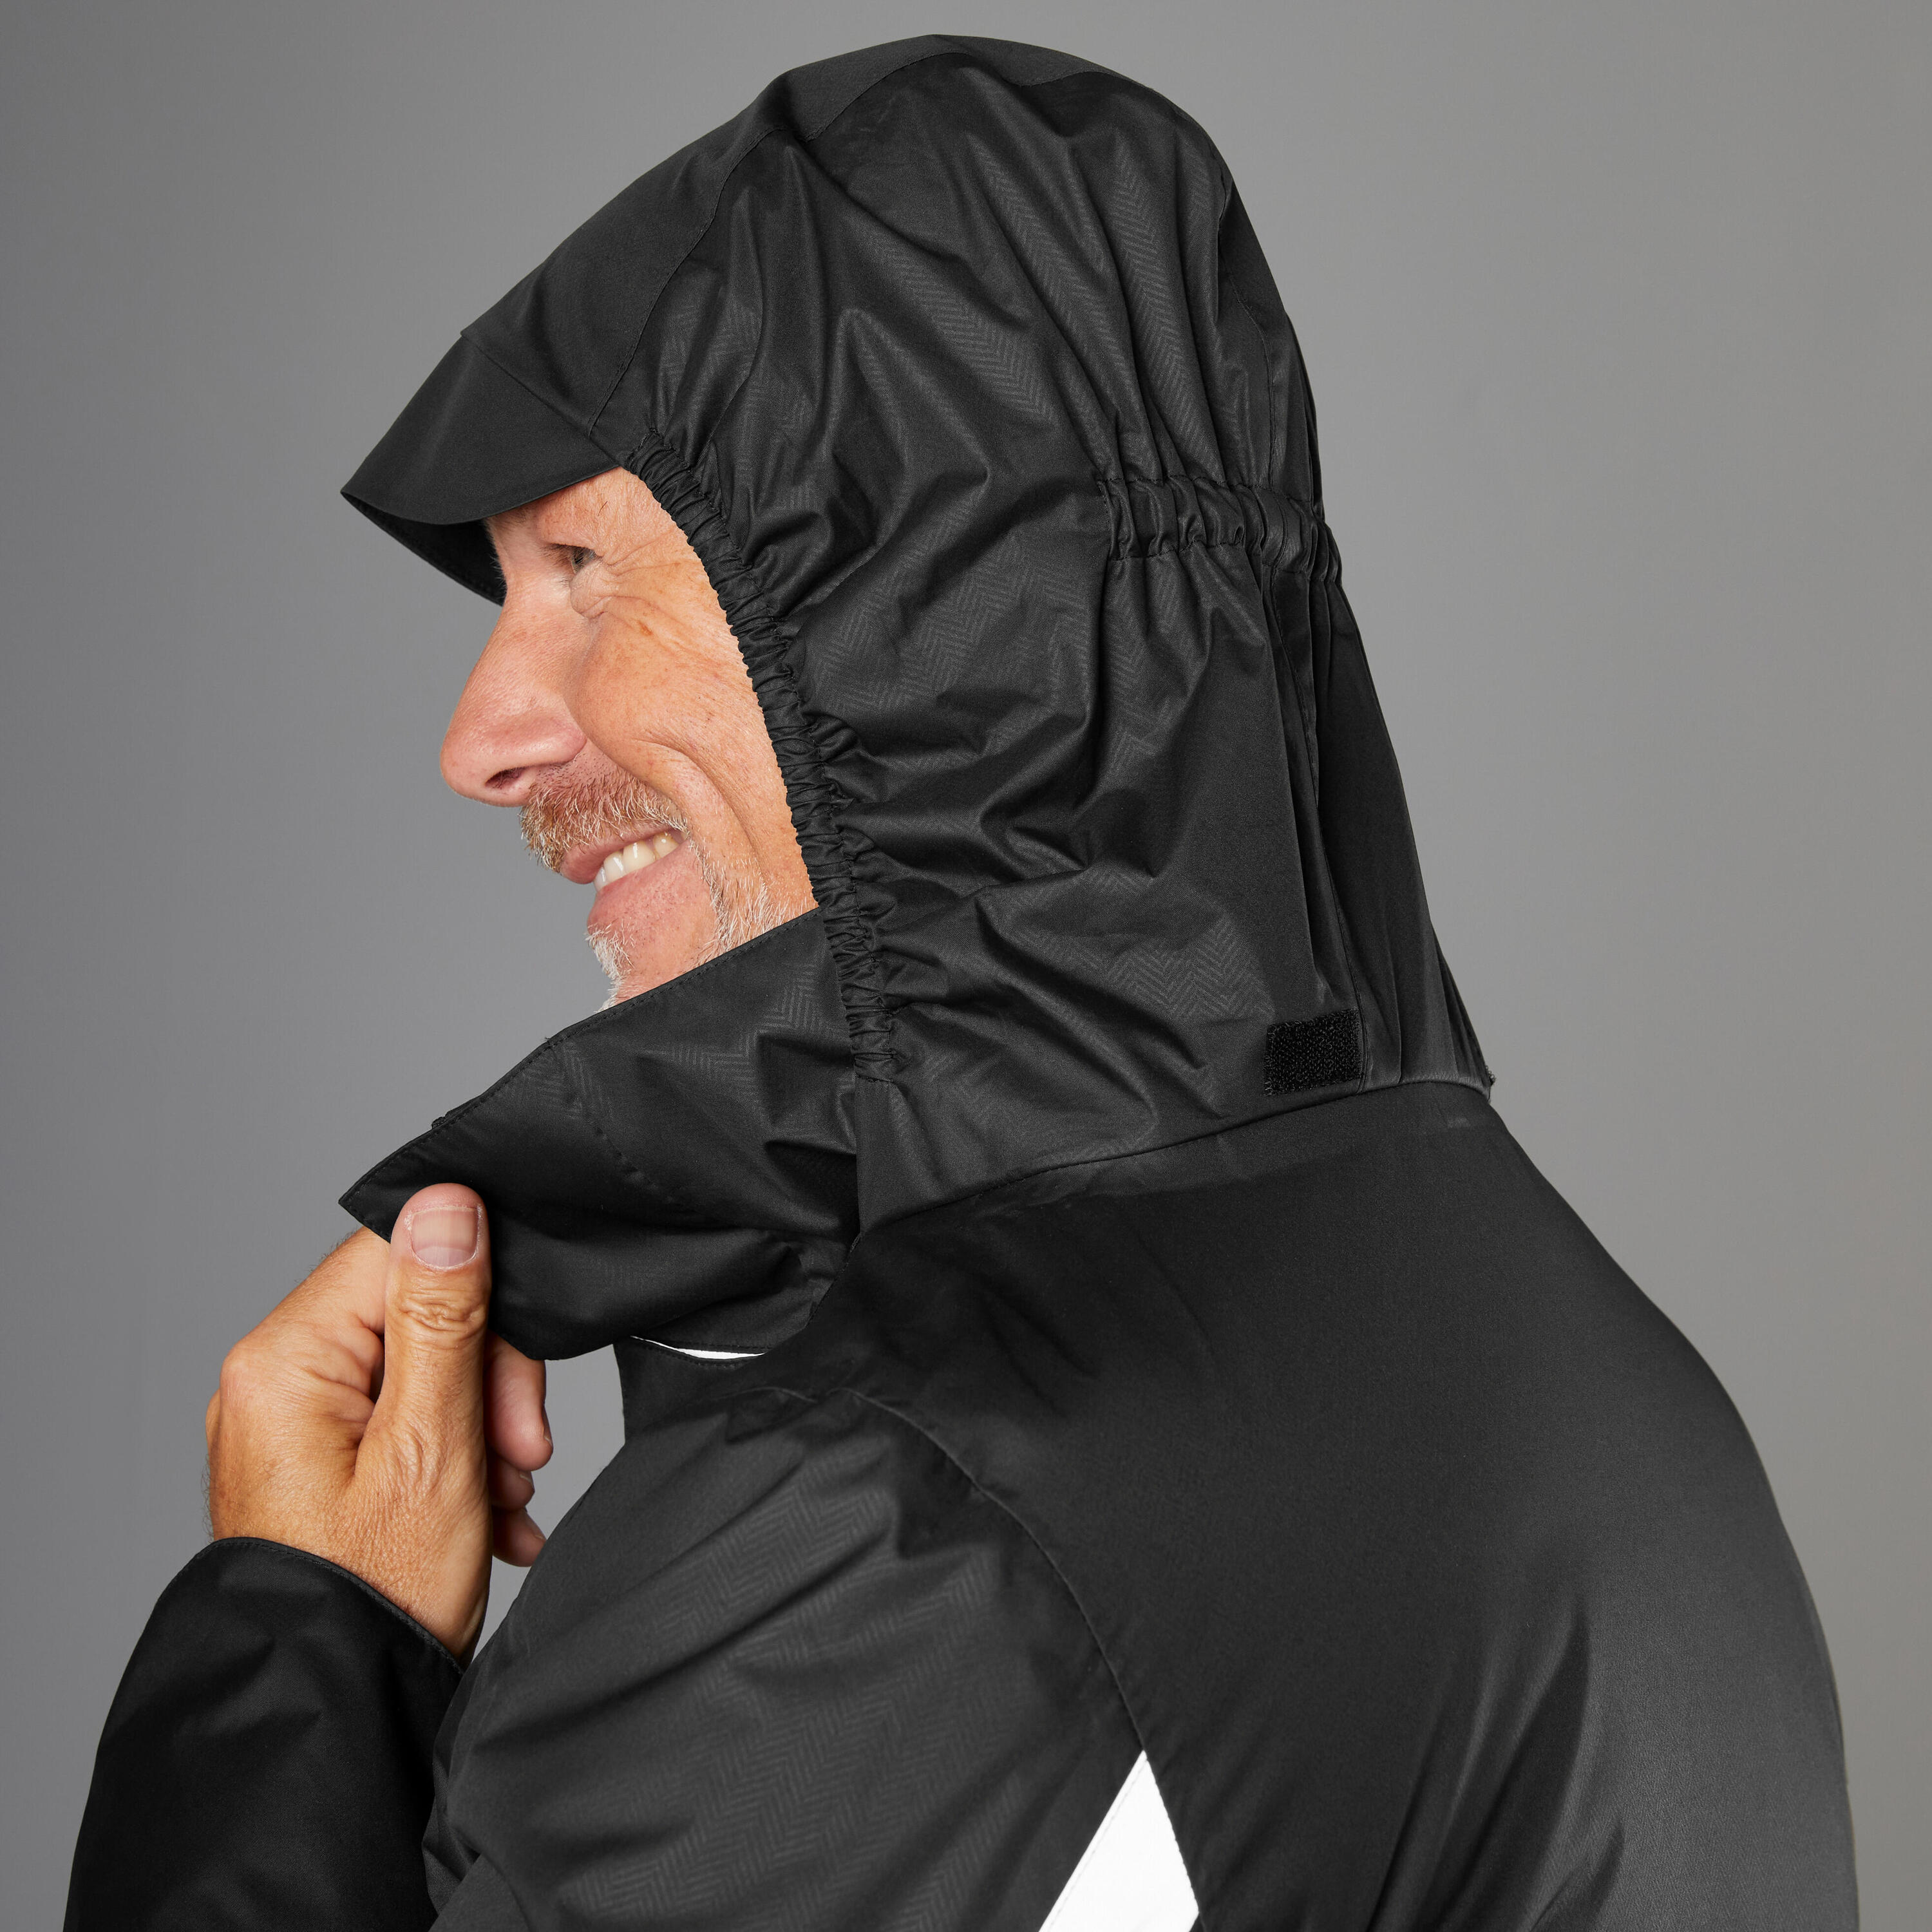 Men's City Cycling Warm Rainproof Jacket 540 - Black 9/16